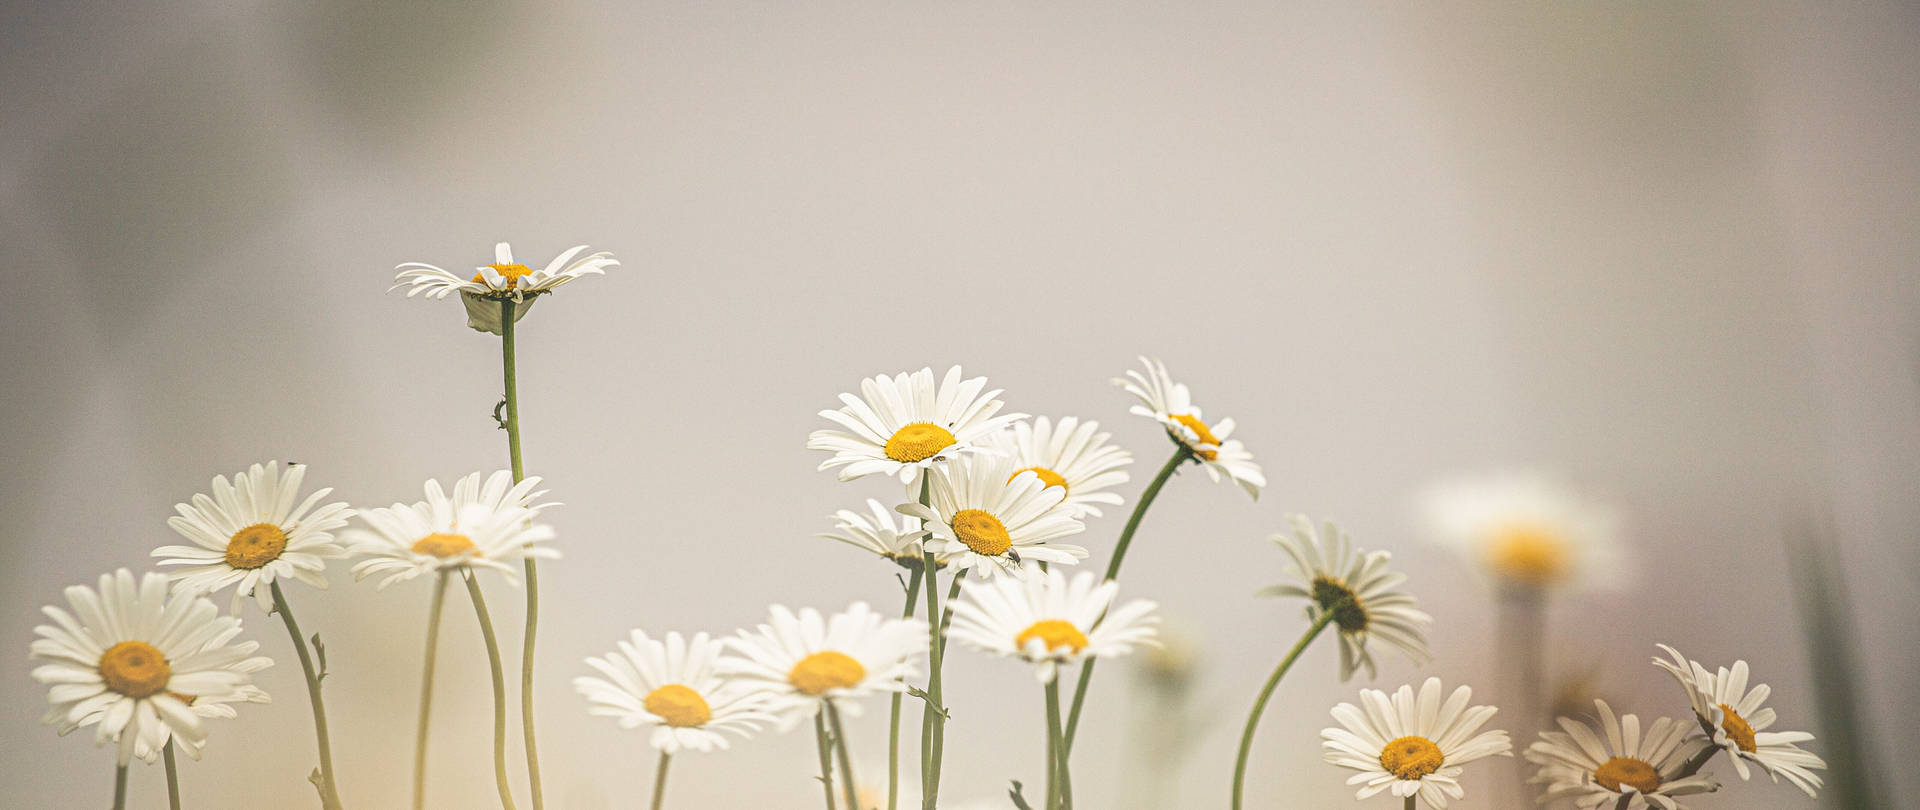 Daisyblumen Im Leichten Filter 4k Wallpaper